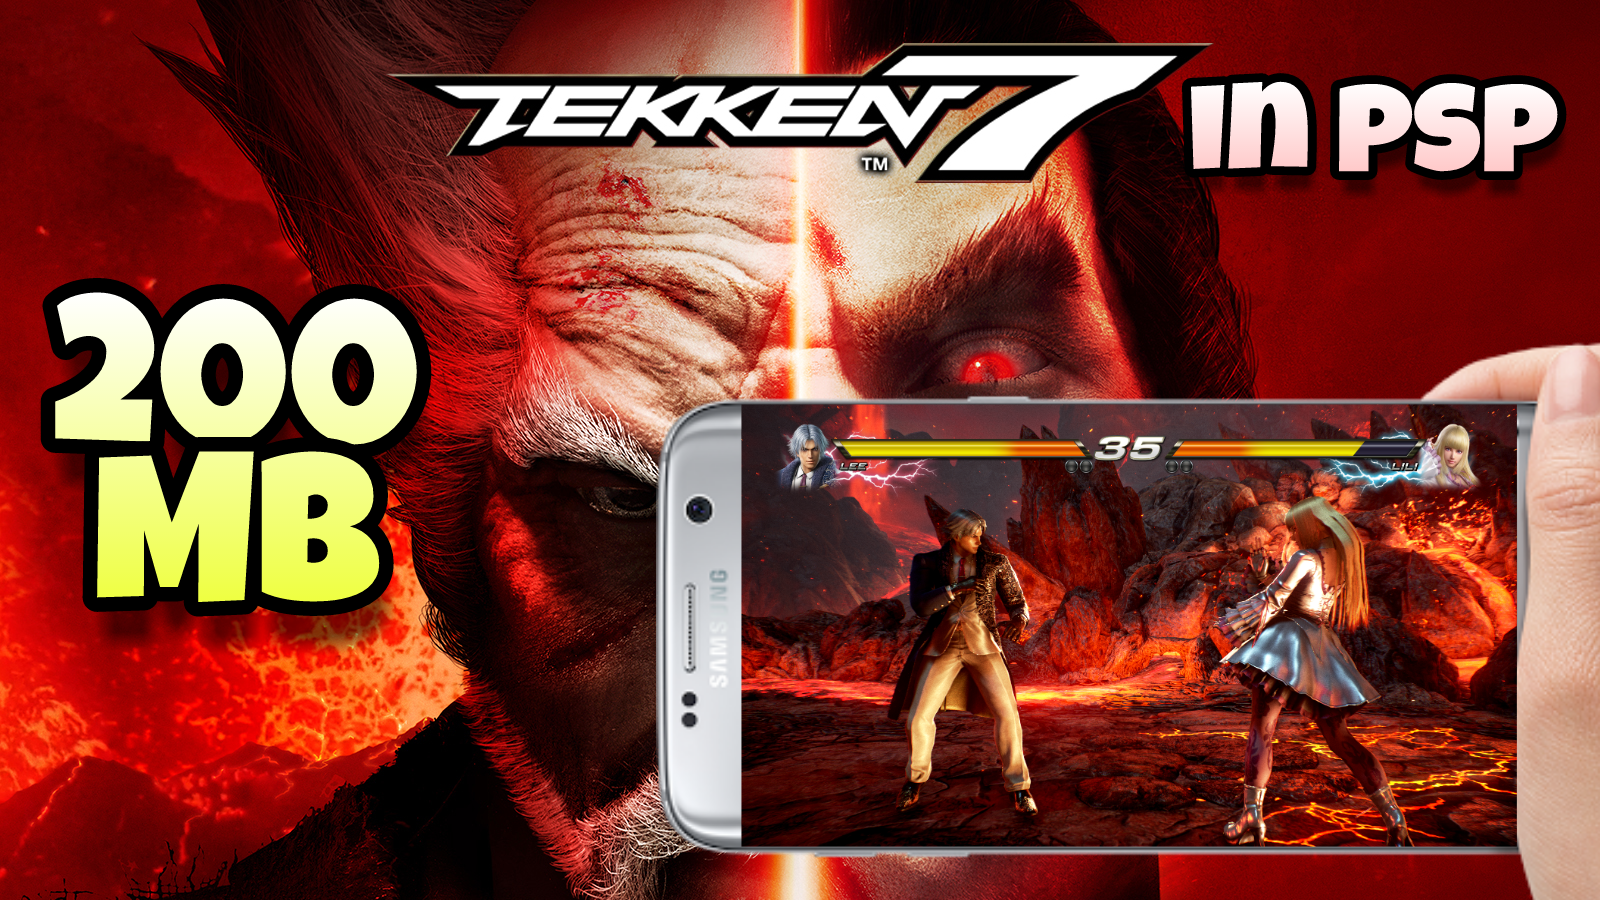 Tekken 7 zip file free download for android